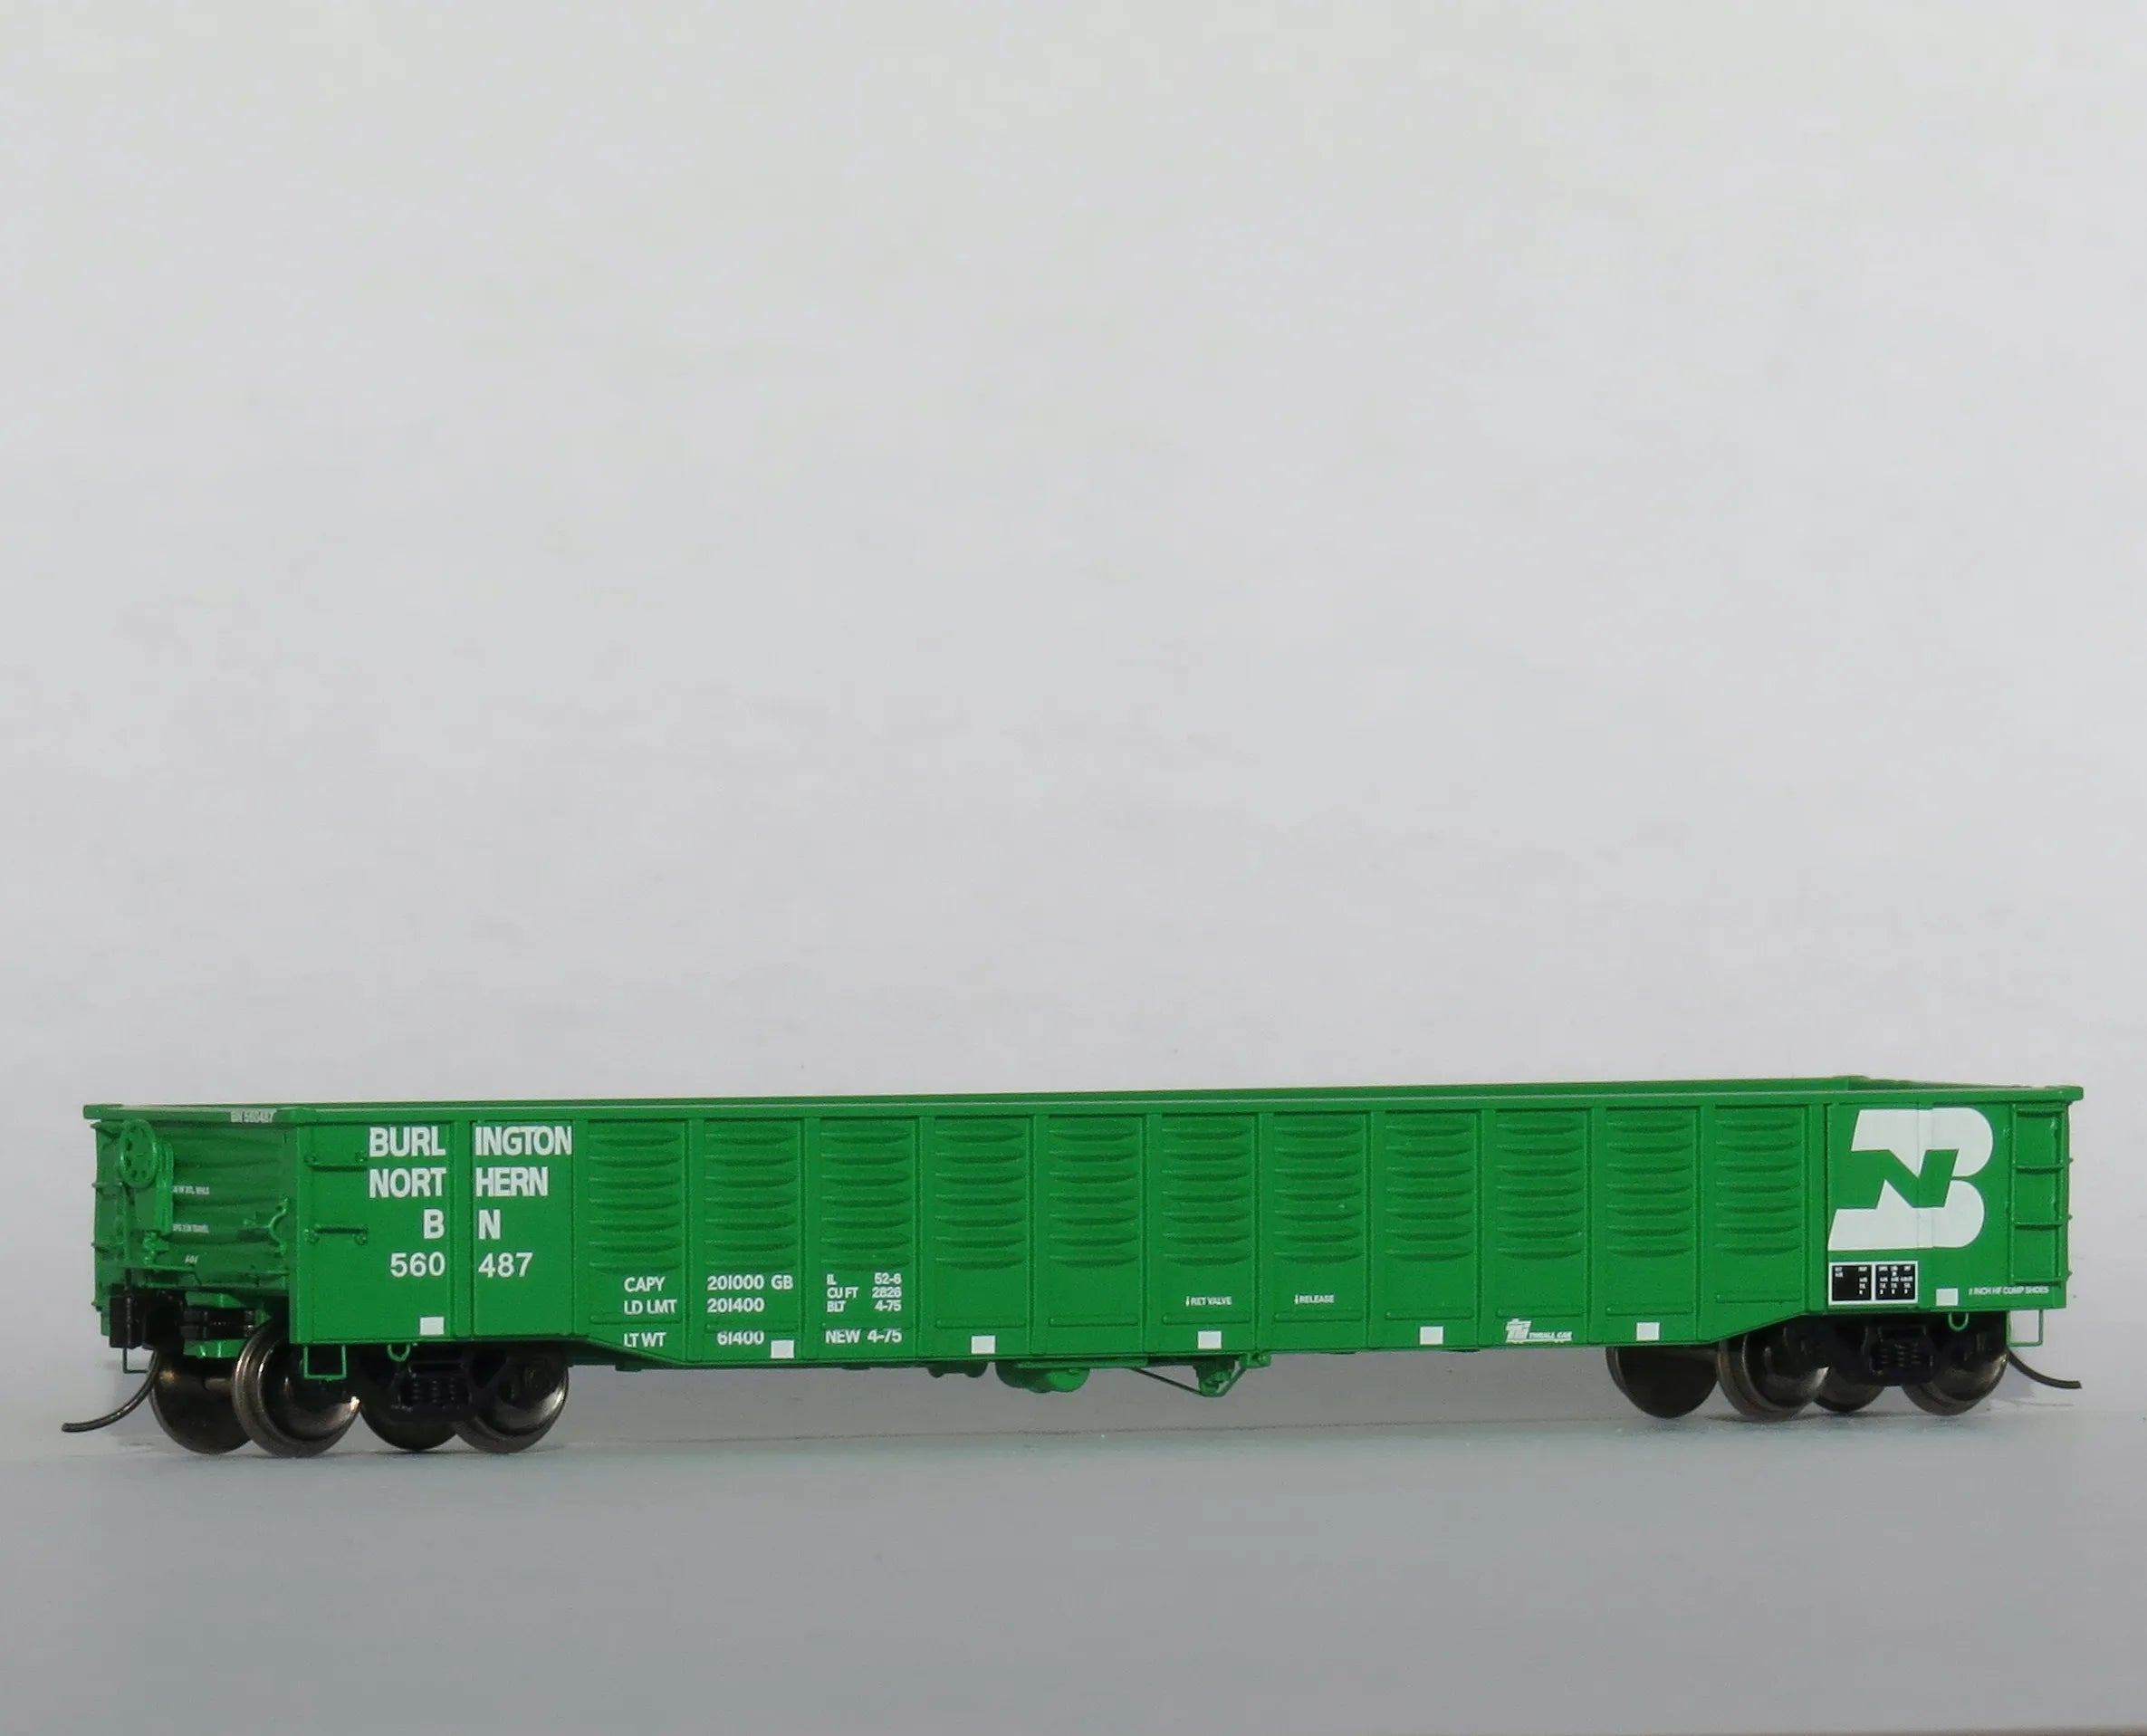 Trainworx 2521121 N Scale, 52' Gondola, Burlington Northern #560601